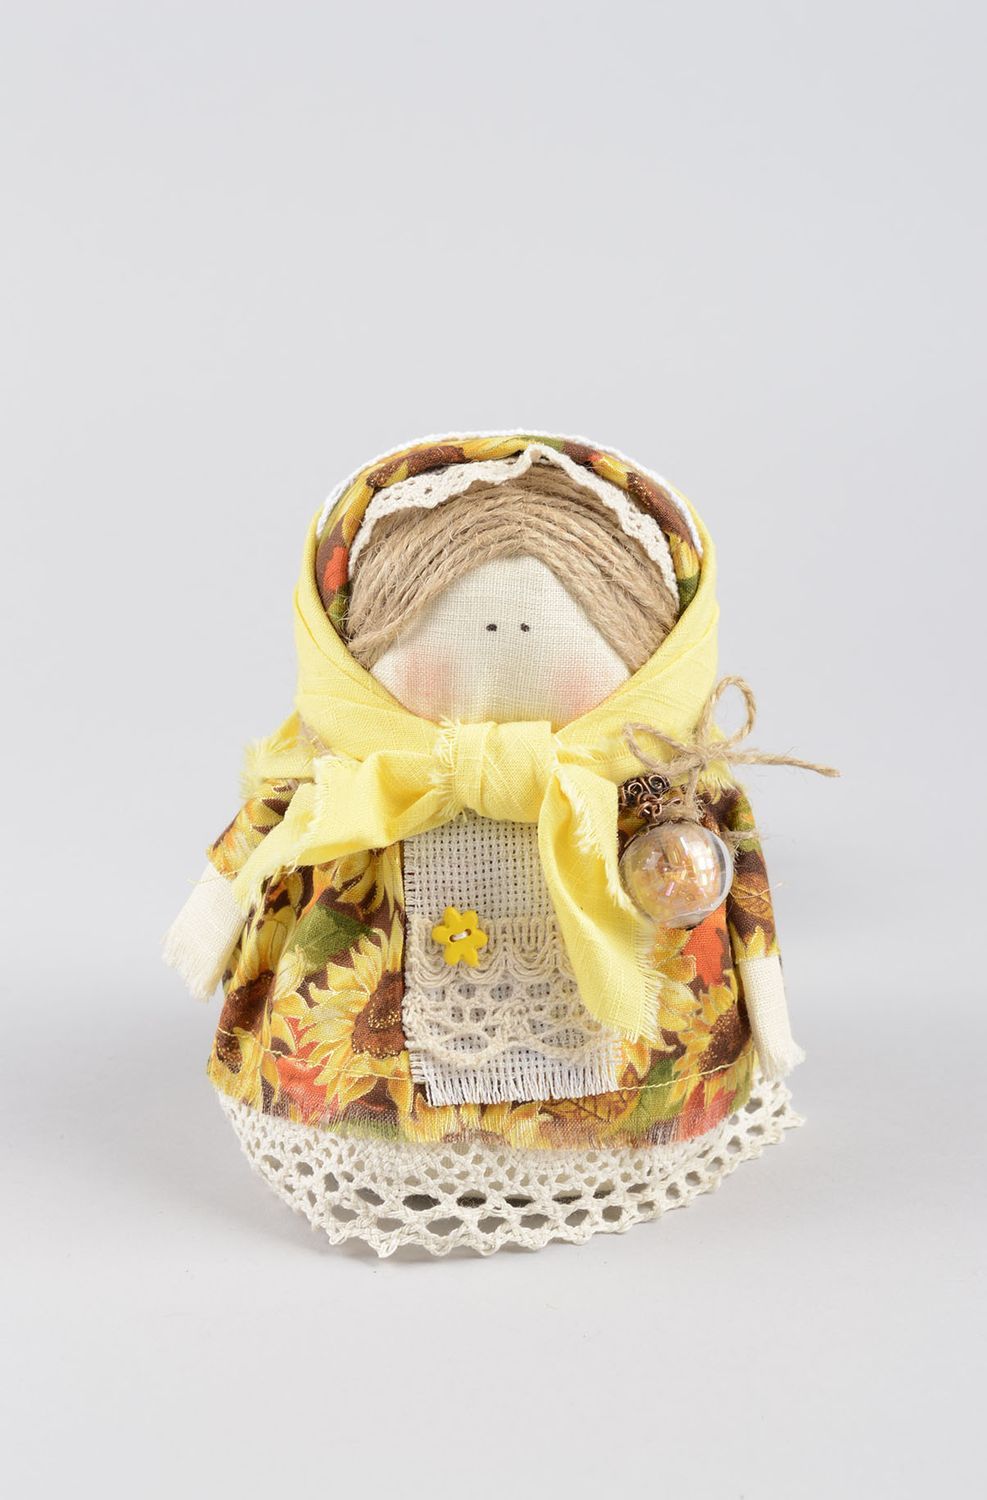 Handmade doll decorative use only unusual gift nursery decor gift ideas photo 5